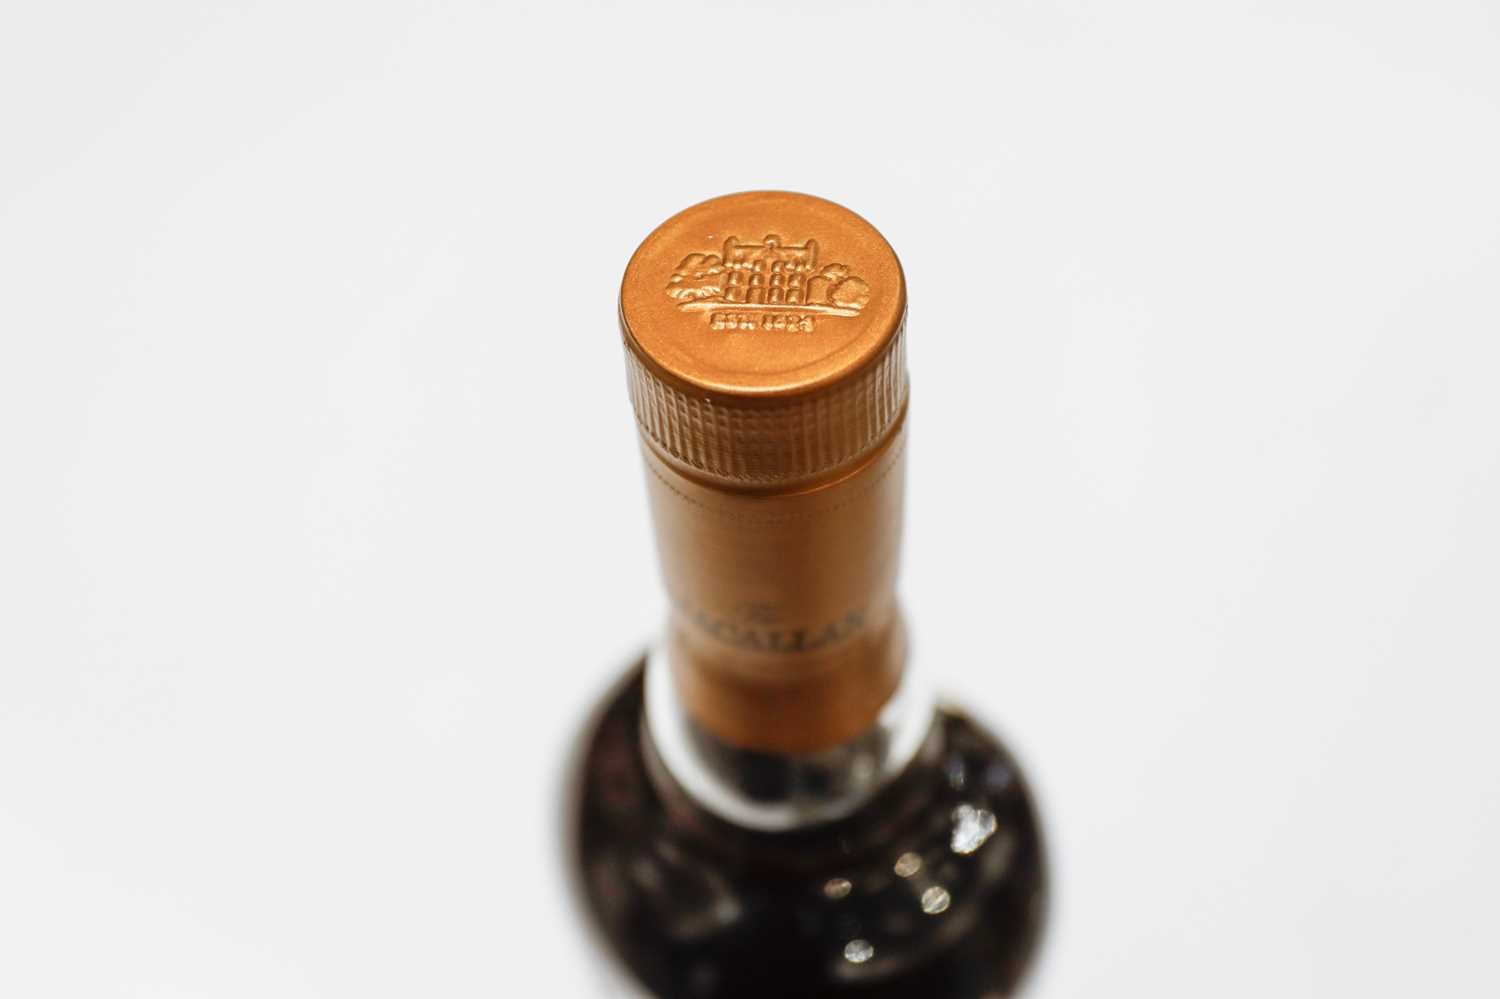 A bottle of Macallan Speaker Martin's Highland Single Malt Scotch Whisky, 40%, 700ml and box - Image 4 of 4